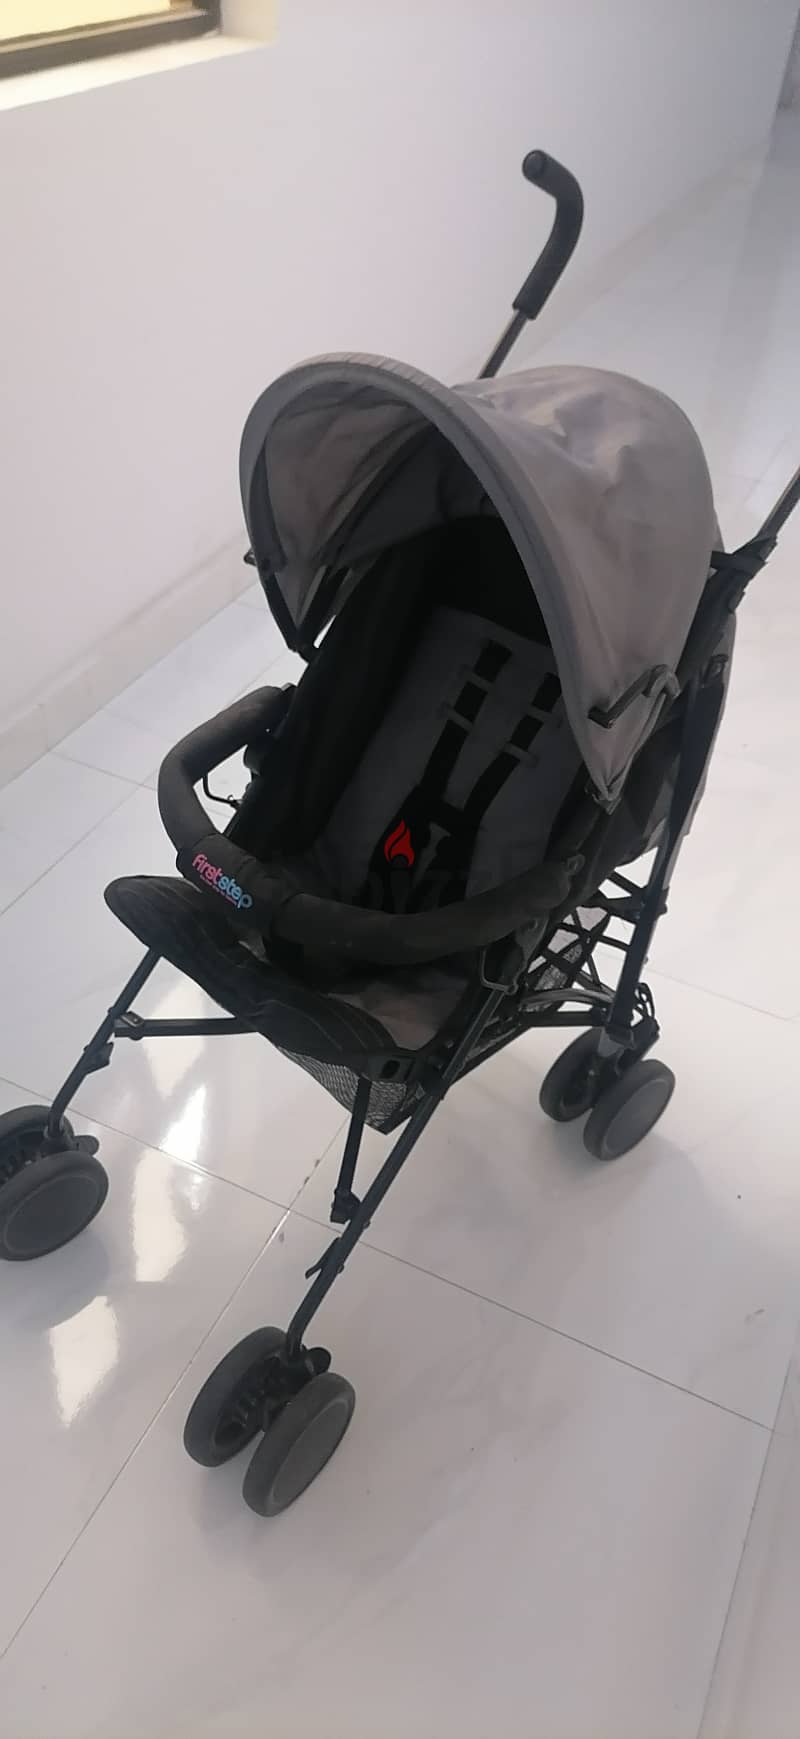 Branded baby stroller 4